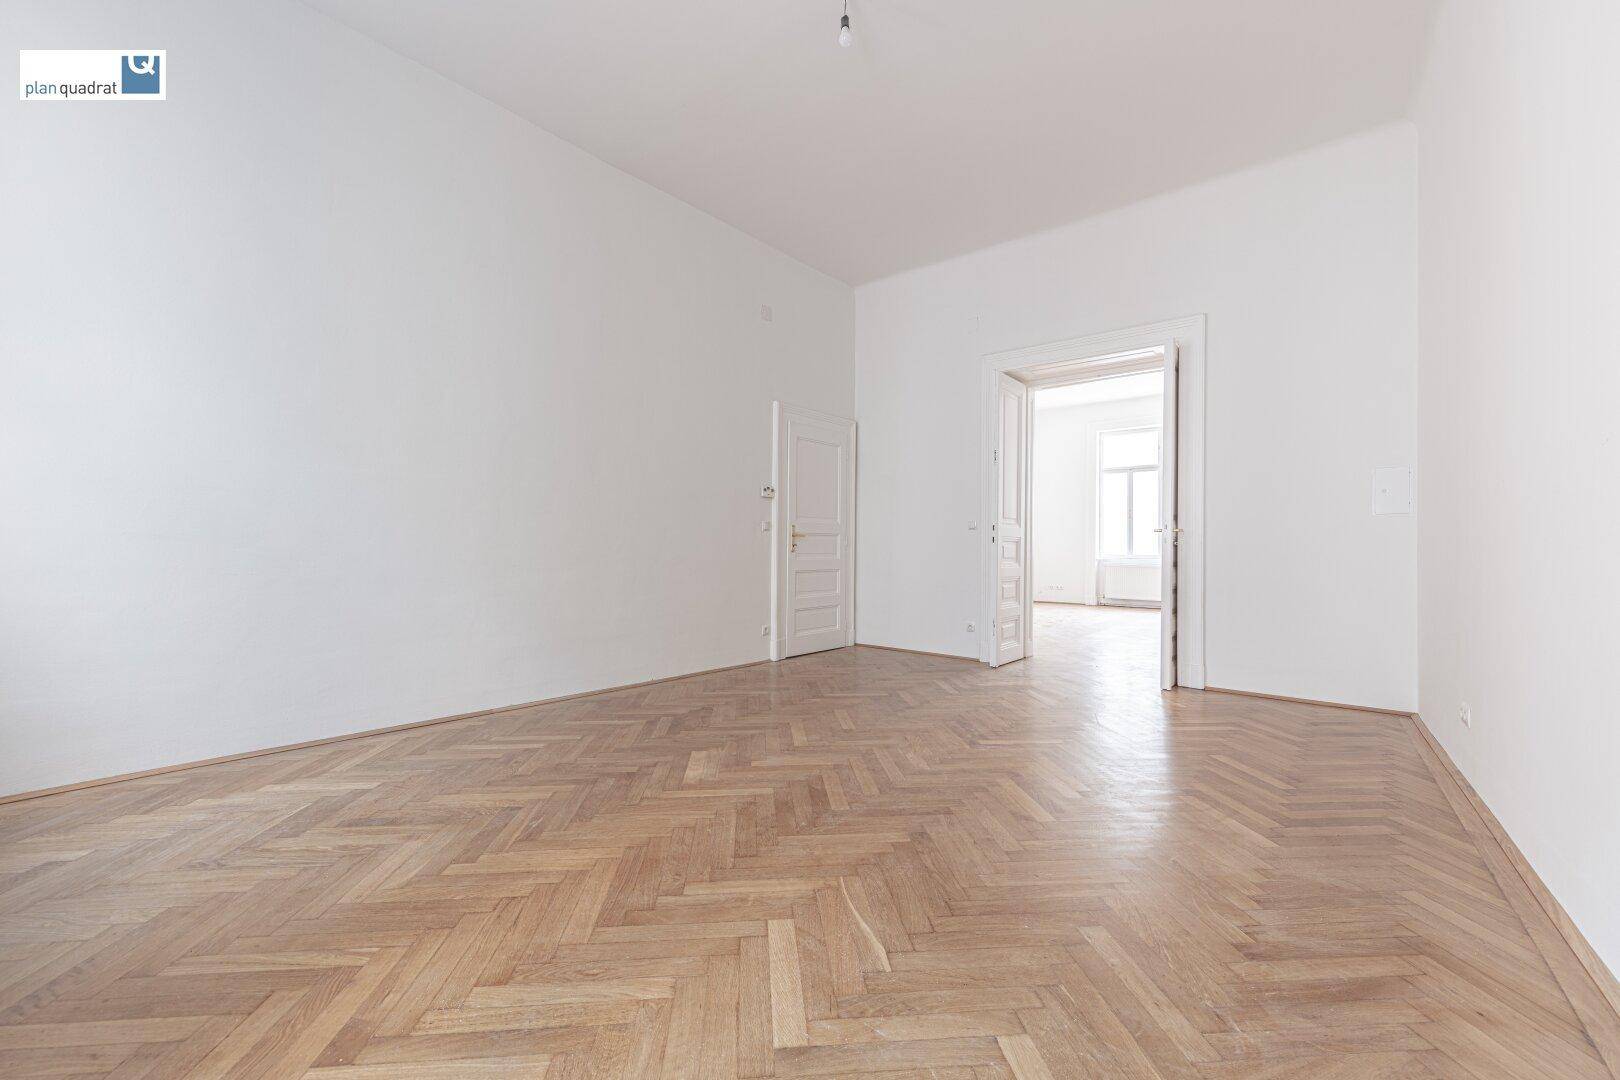 Zimmer 3 (gem. Wohnungsgrundriss) - ca. 26,80 m²